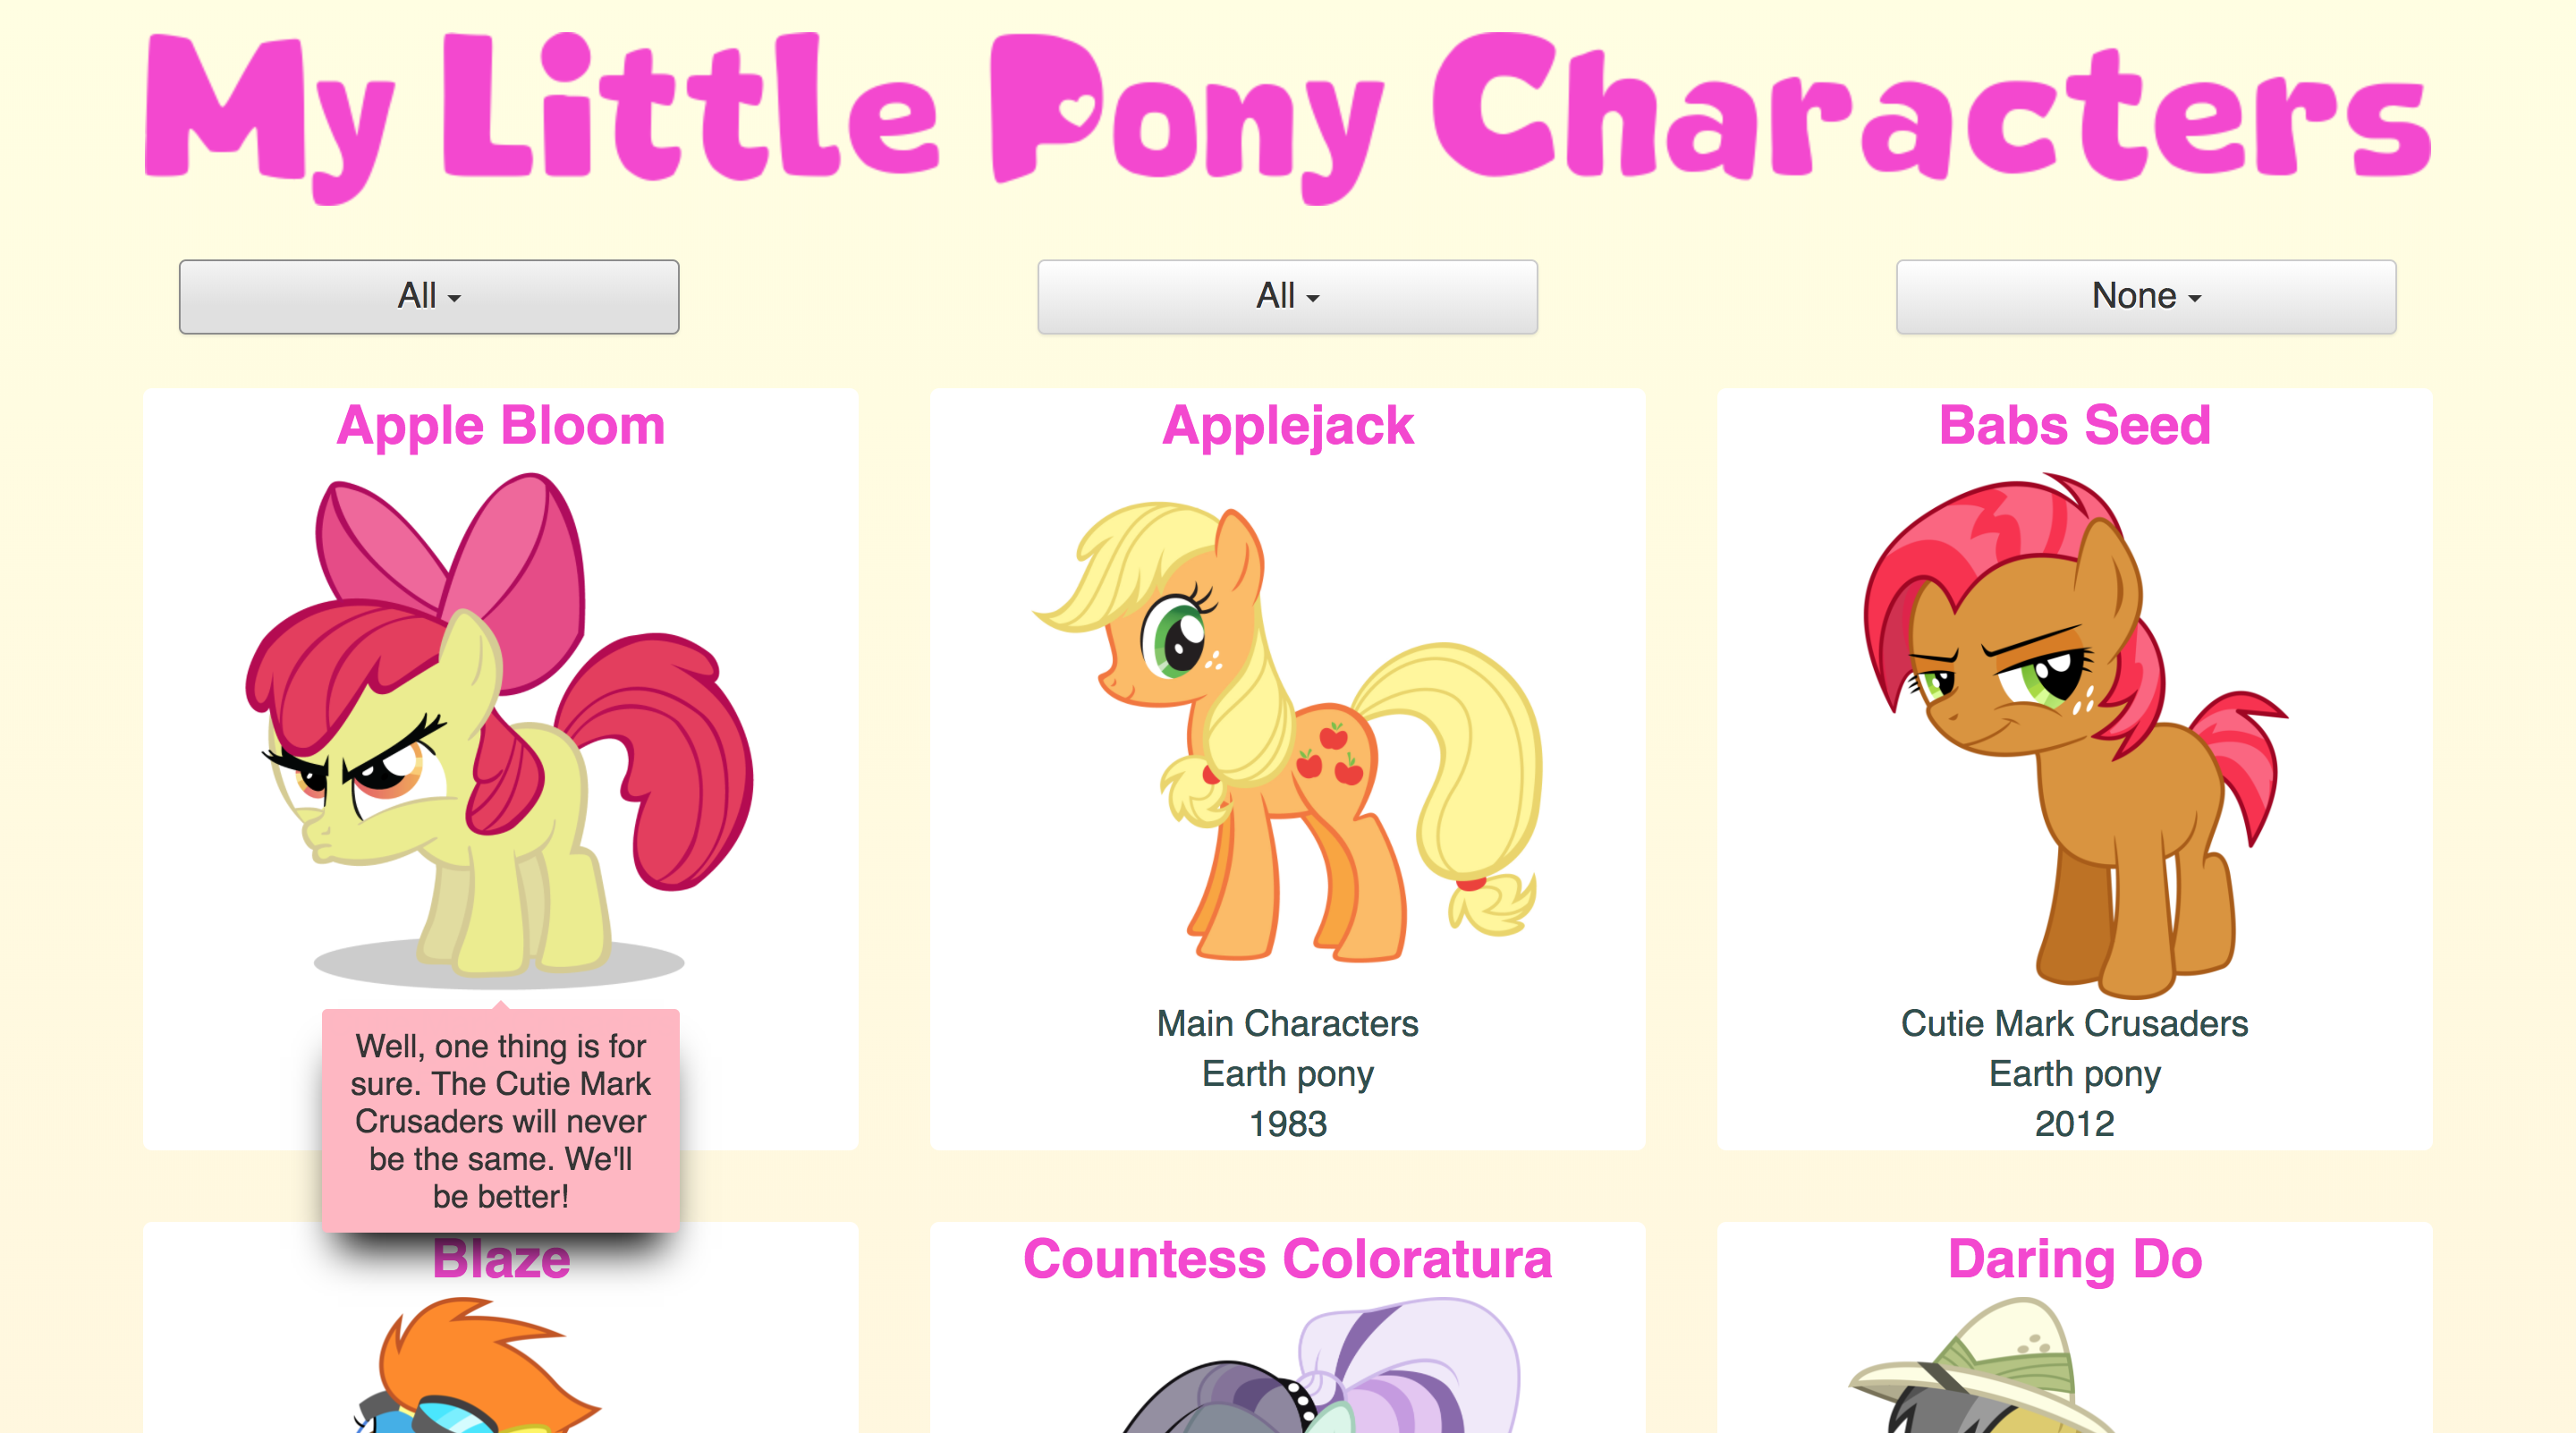 My little pony english. Пони имена. Маленькие пони имена. Имена всех пони. My little Pony имена.